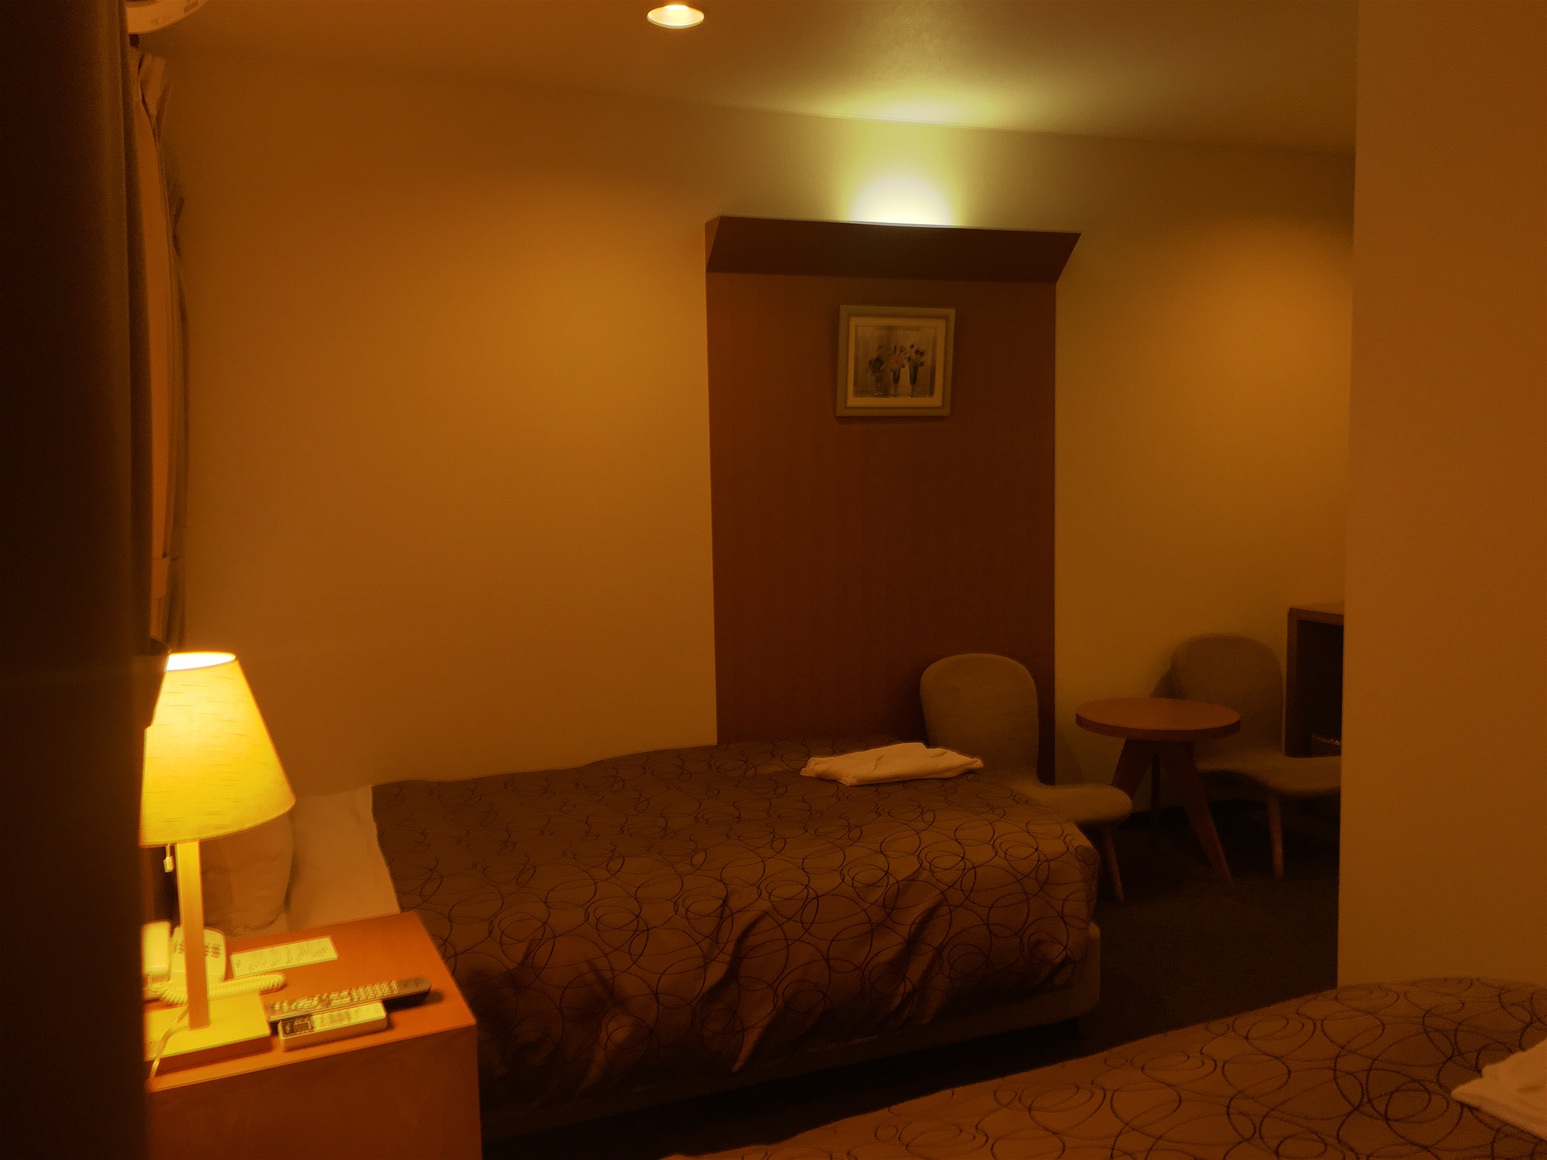 This photo about Hotel Dew Oyamazaki shared on HyHotel.com